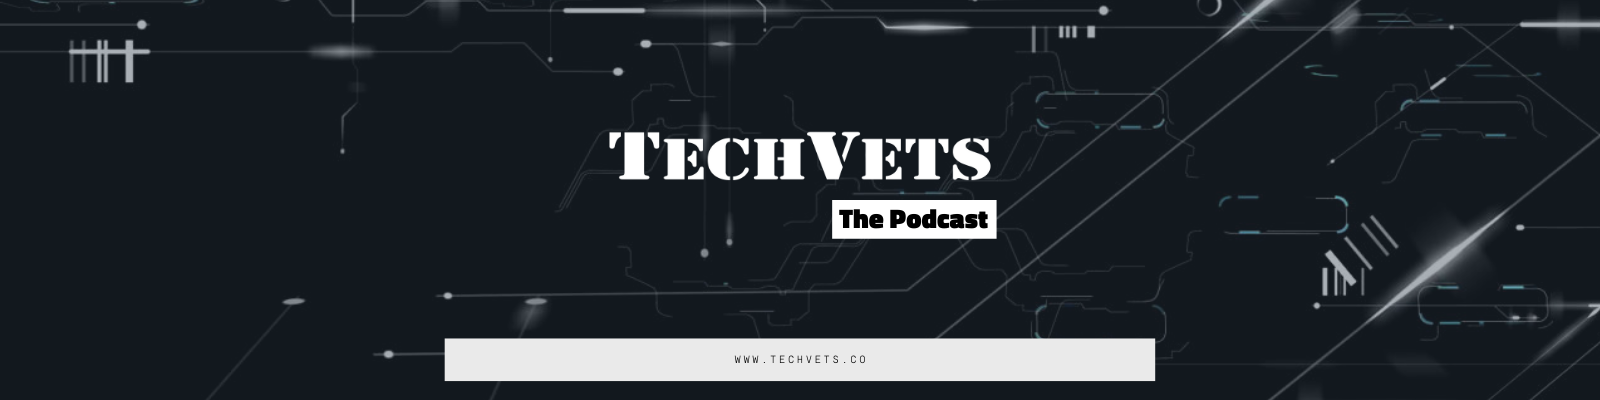 TechVets: The Podcast